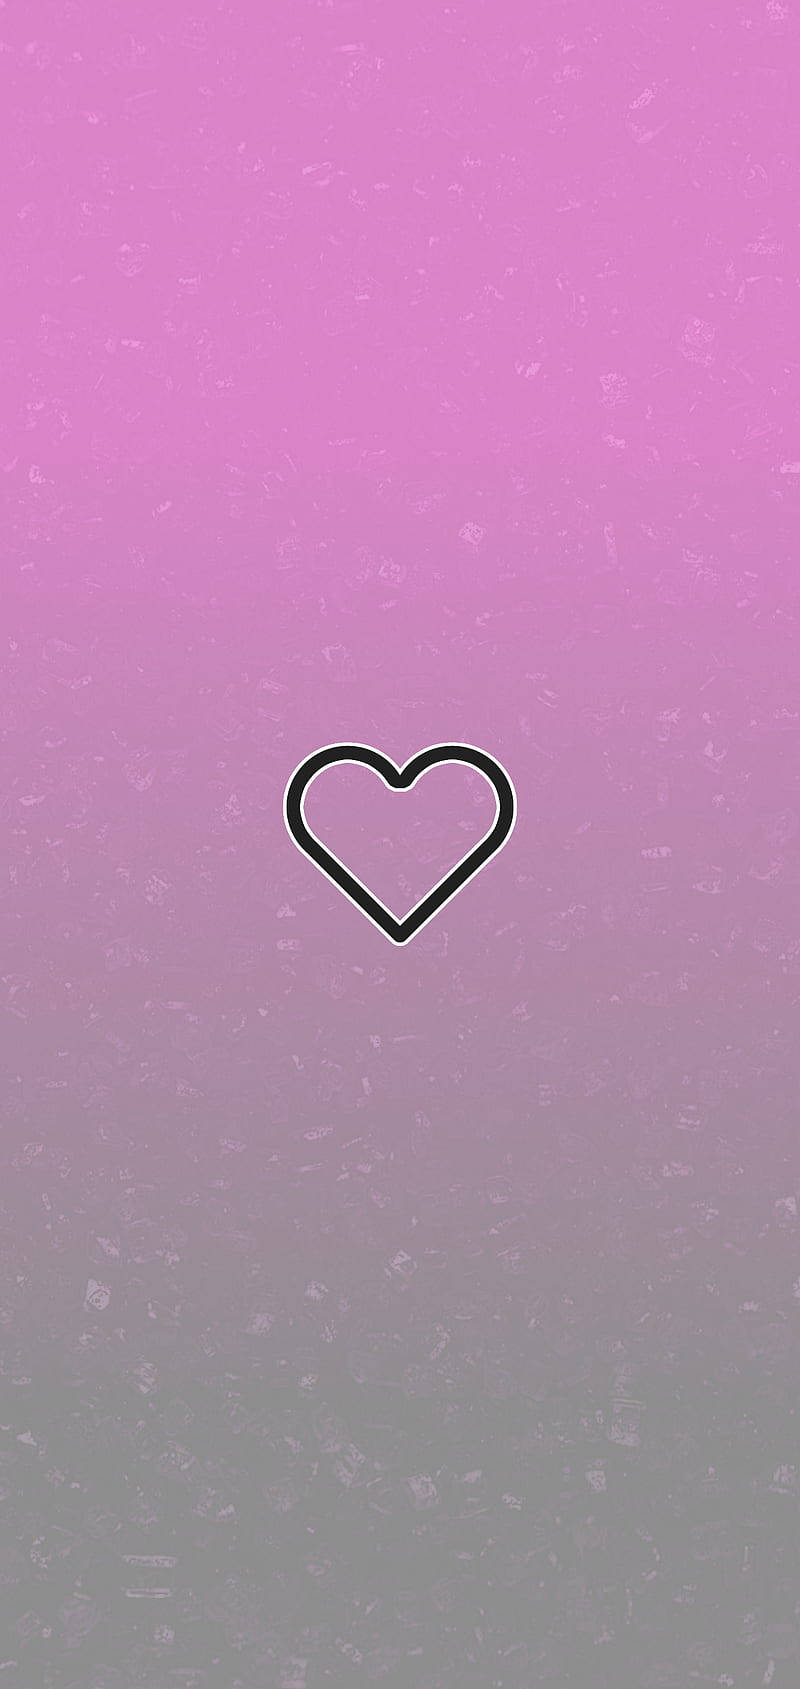 Cute Instagram Heart On Gradient Background